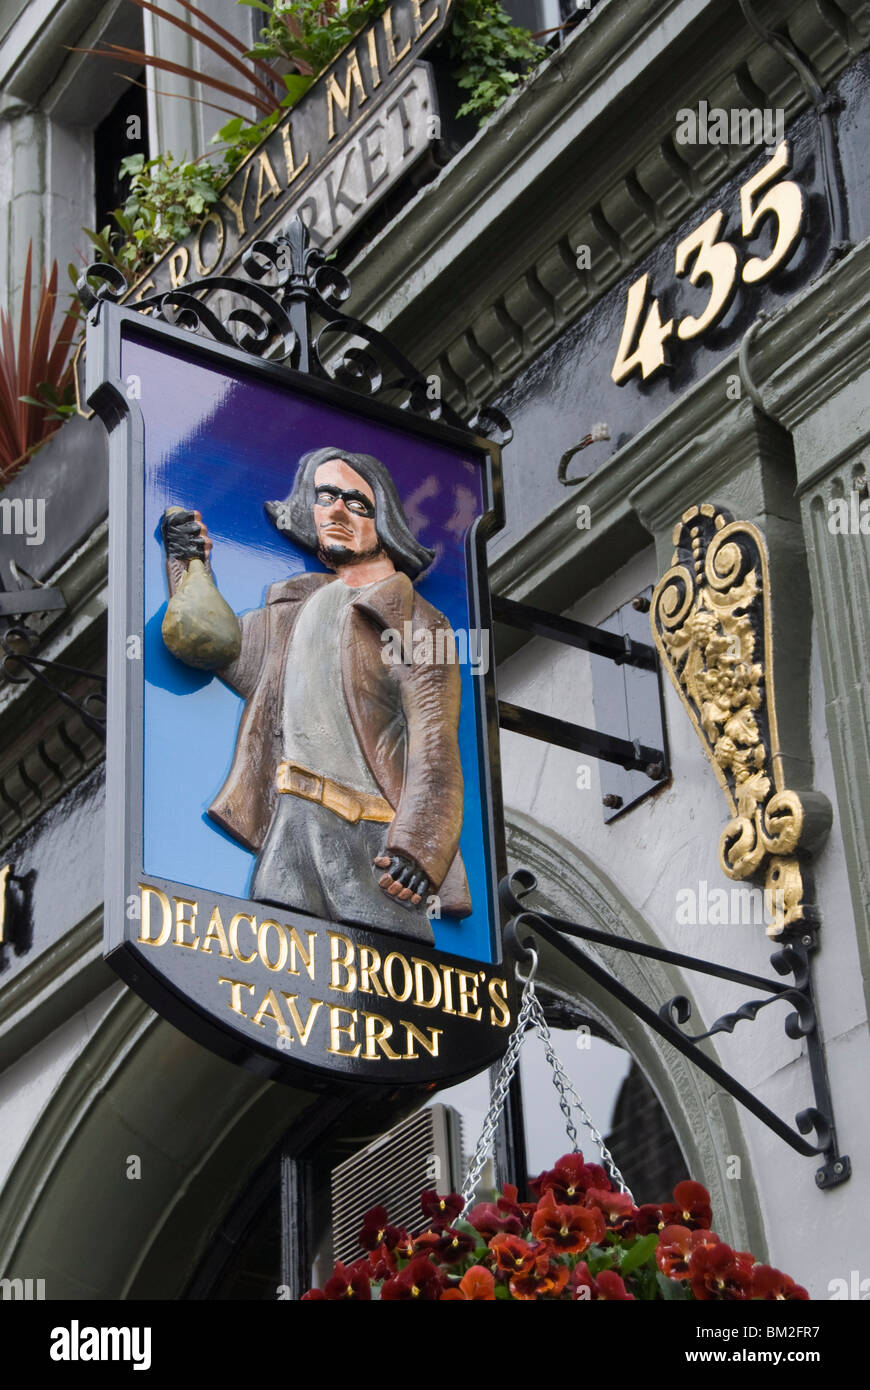 External sign for Deacon Brodie's Tavern, Edinburgh, Lothian, Scotland, UK Stock Photo